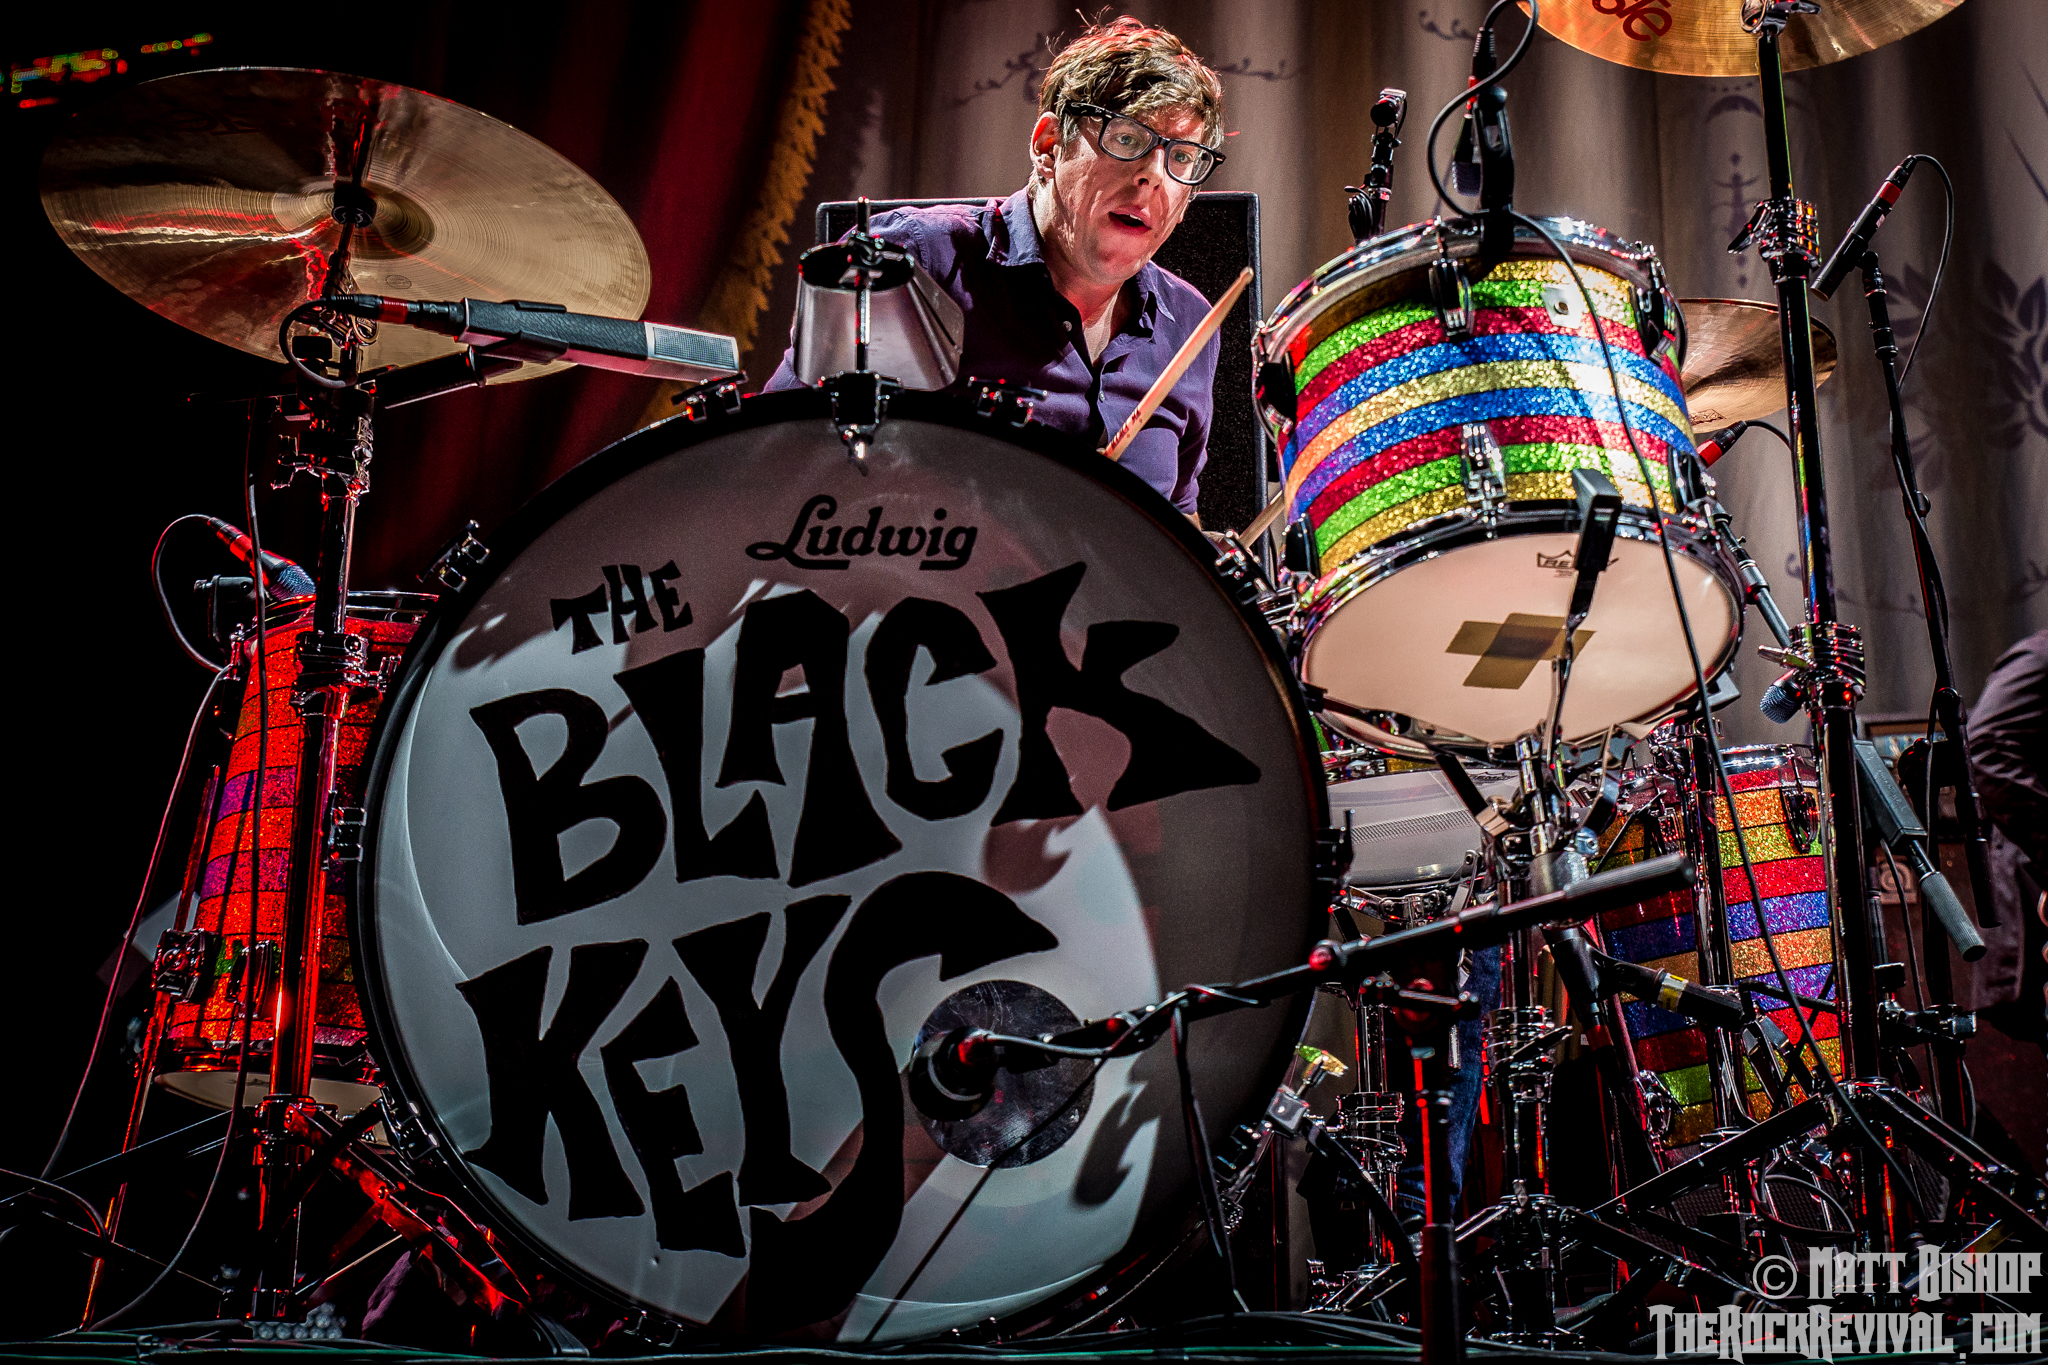 THE BLACK KEYS – Live Photo Gallery